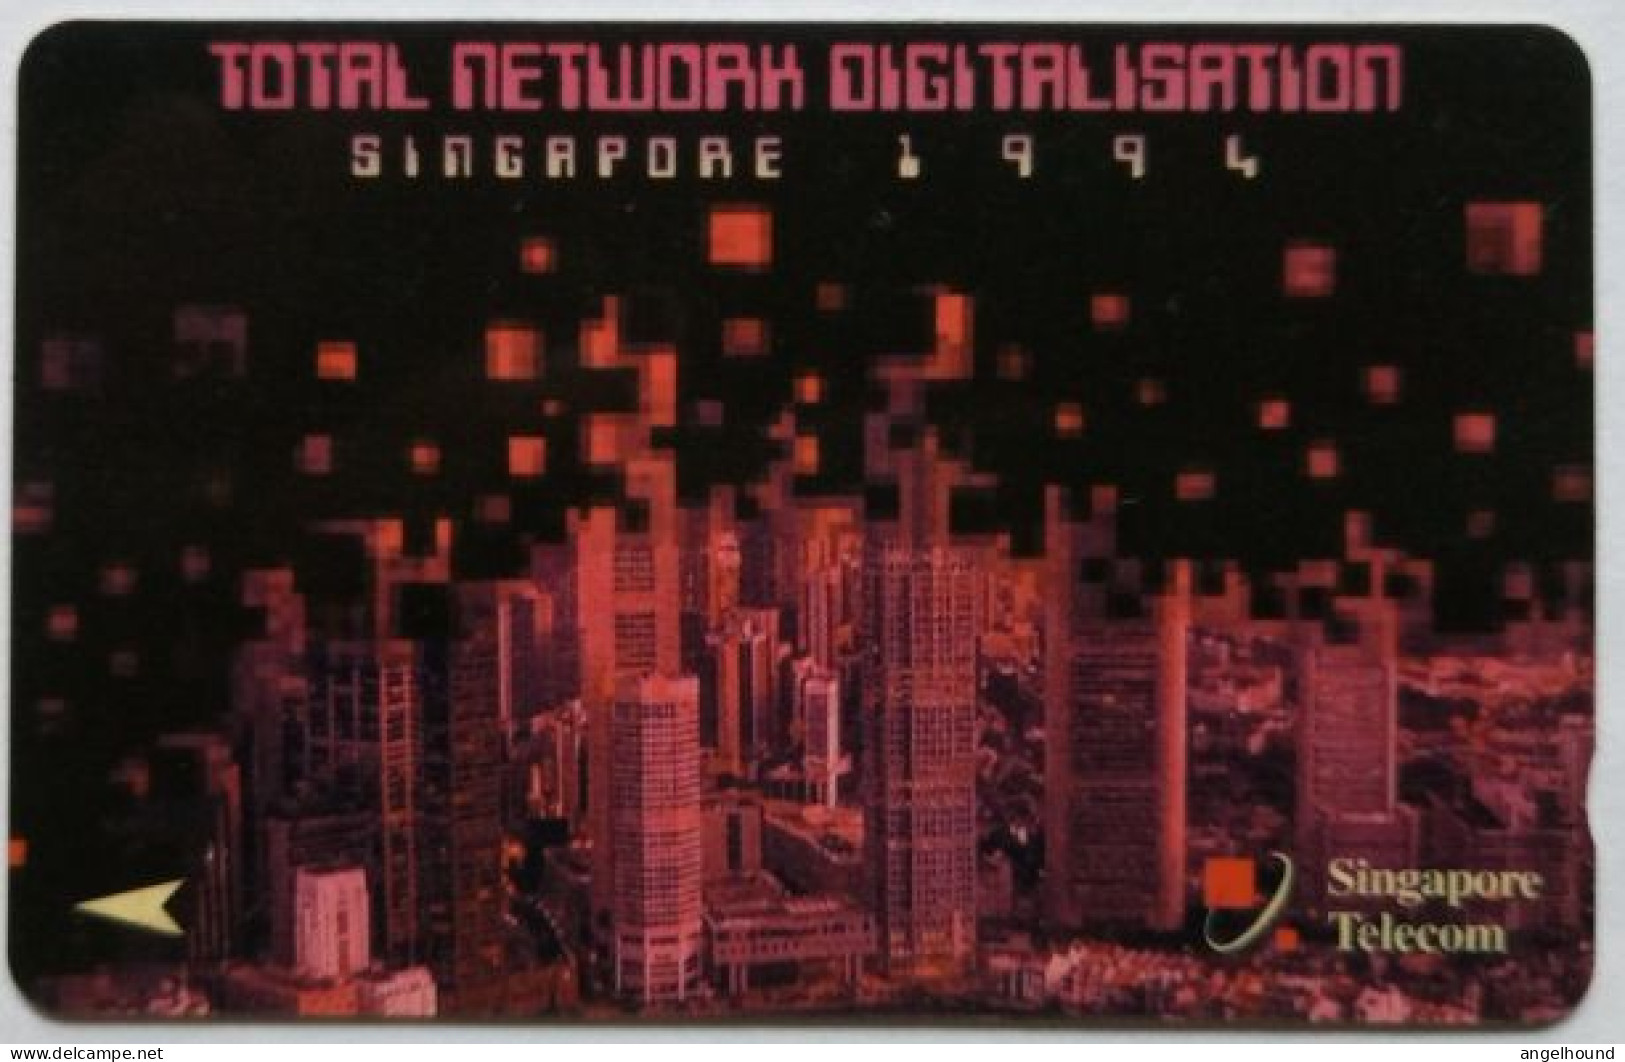 Singapore  $3  GPT  1SNDB - Total Network Digitalisation Singfapore 1994 - Singapore